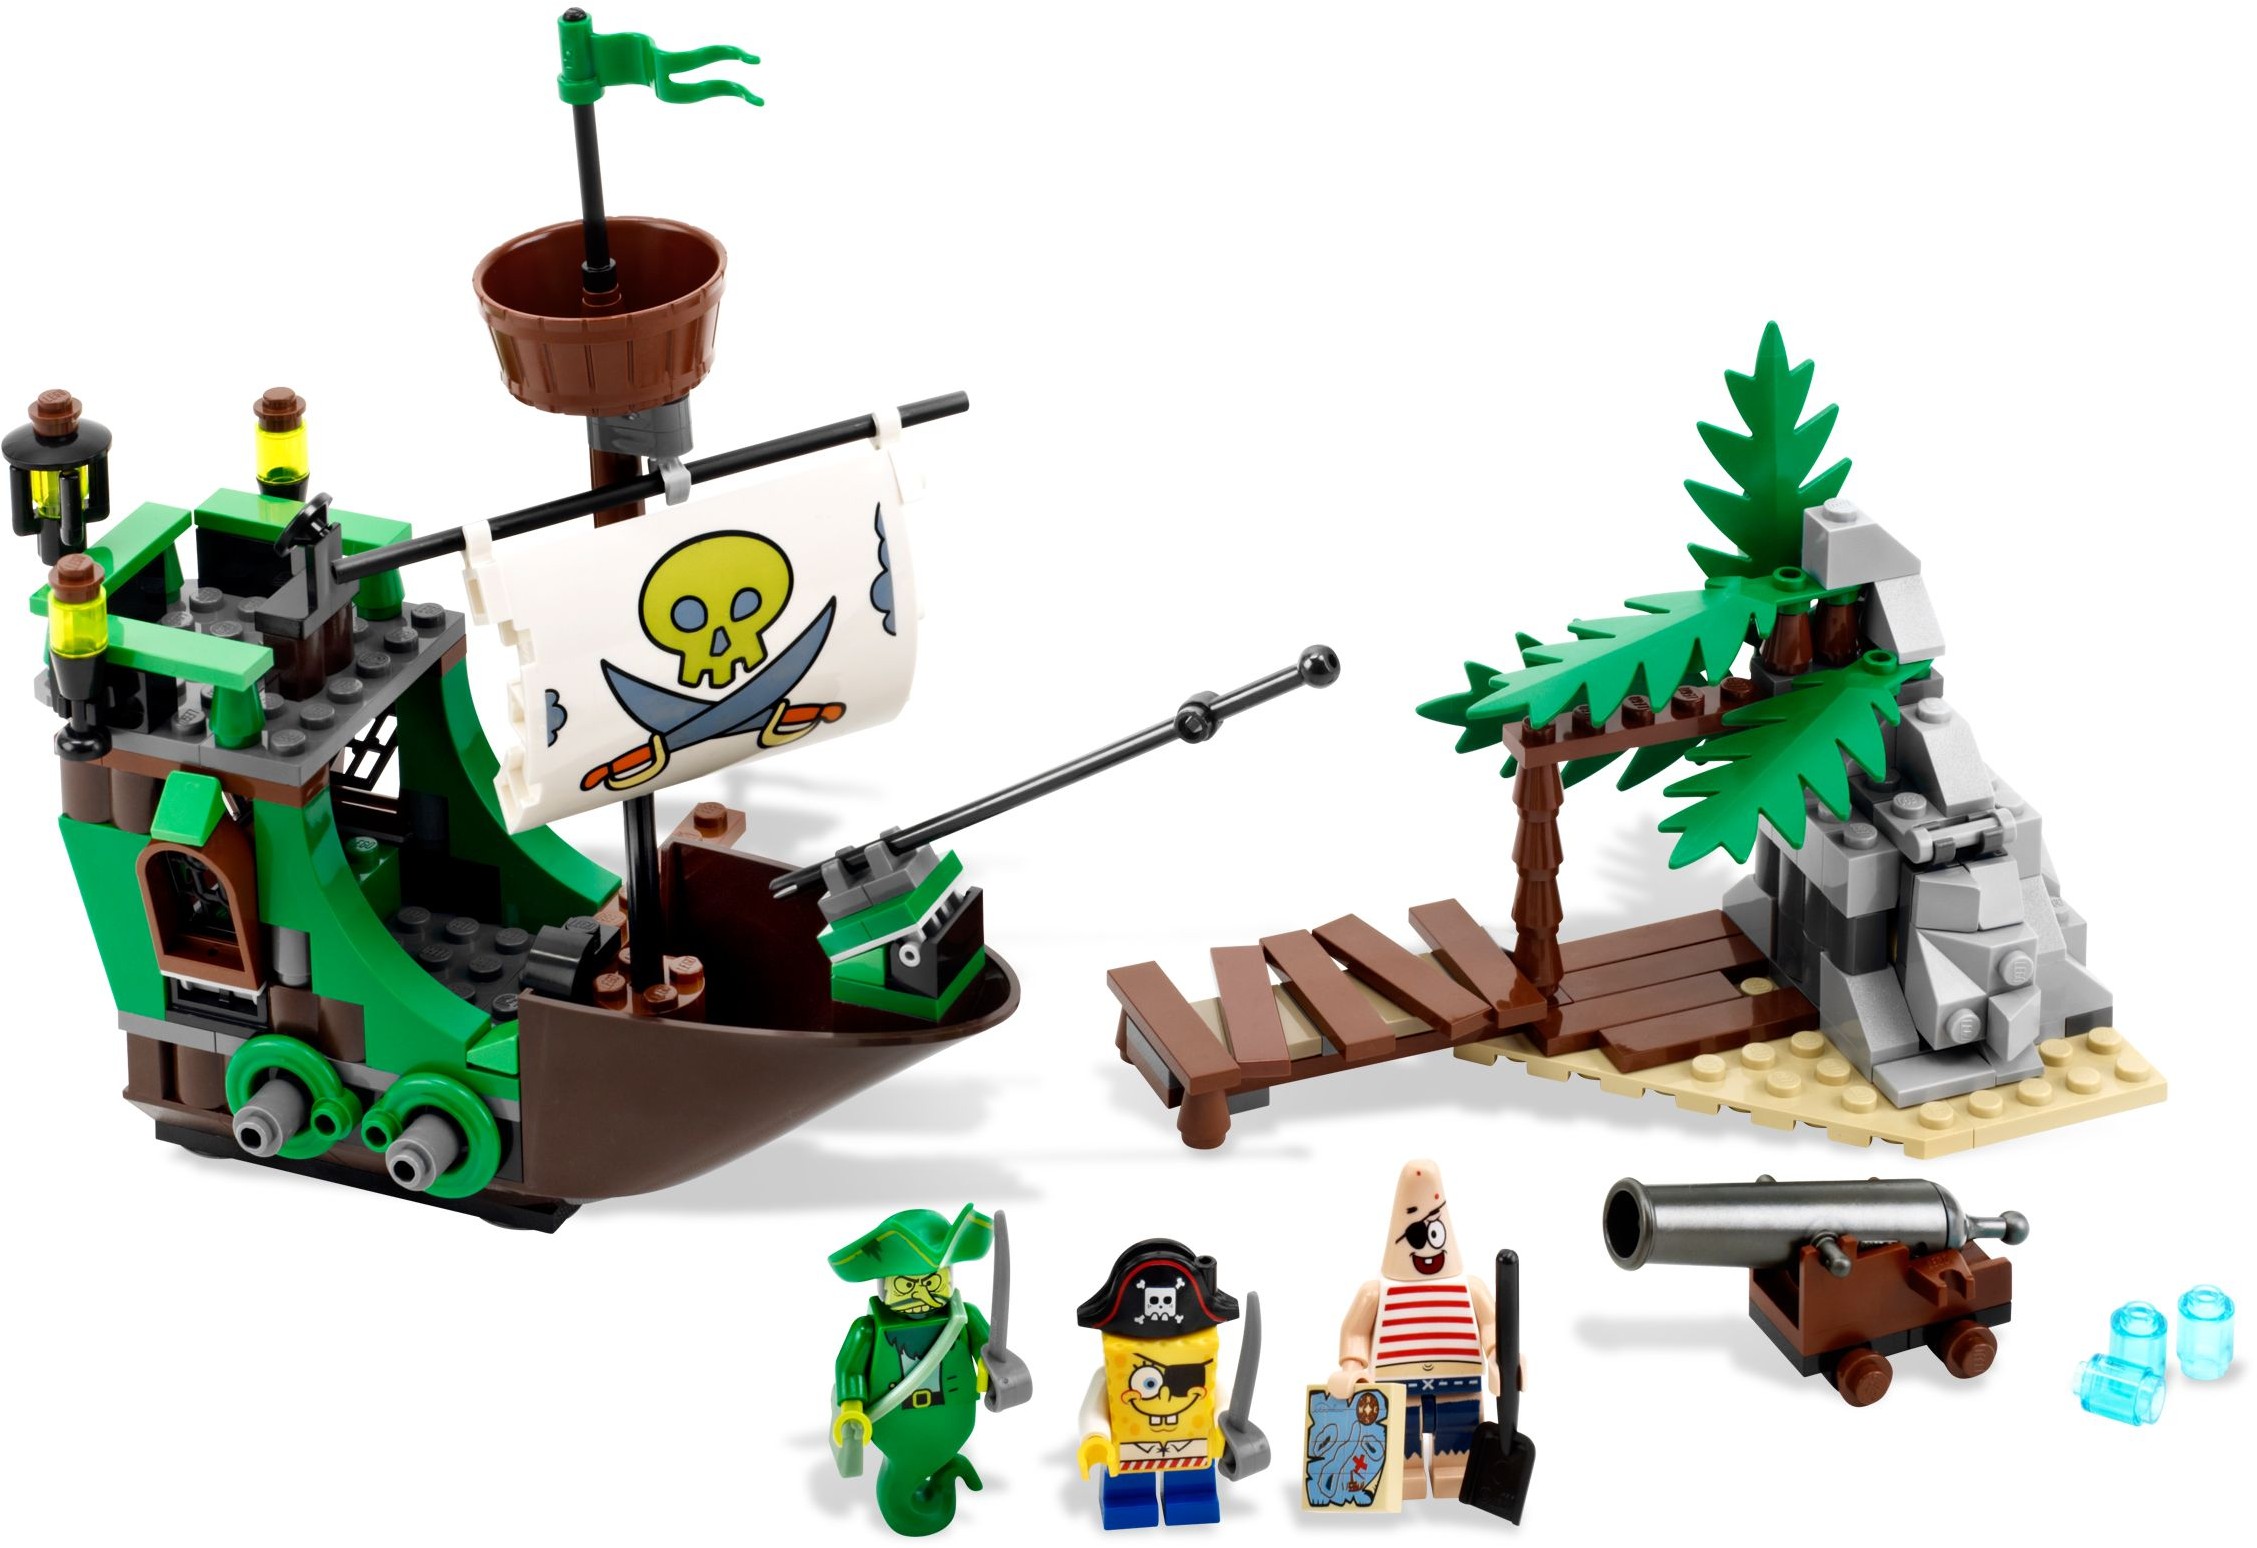 NEW LEGO Patrick Pirate FROM SET 3817 SPONGEBOB SQUAREPANTS bob033 